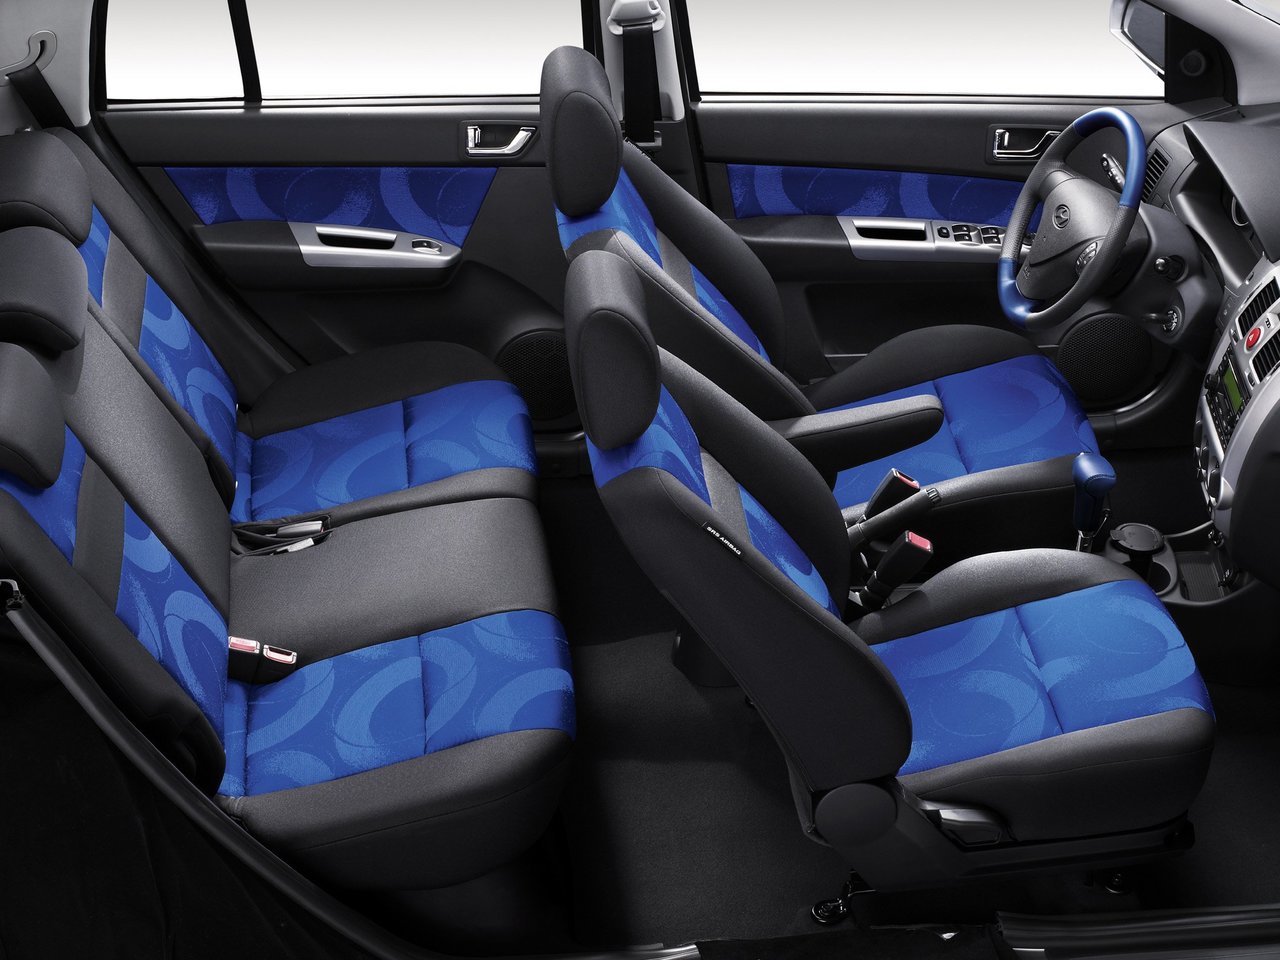 Hyundai Getz interior - Seats